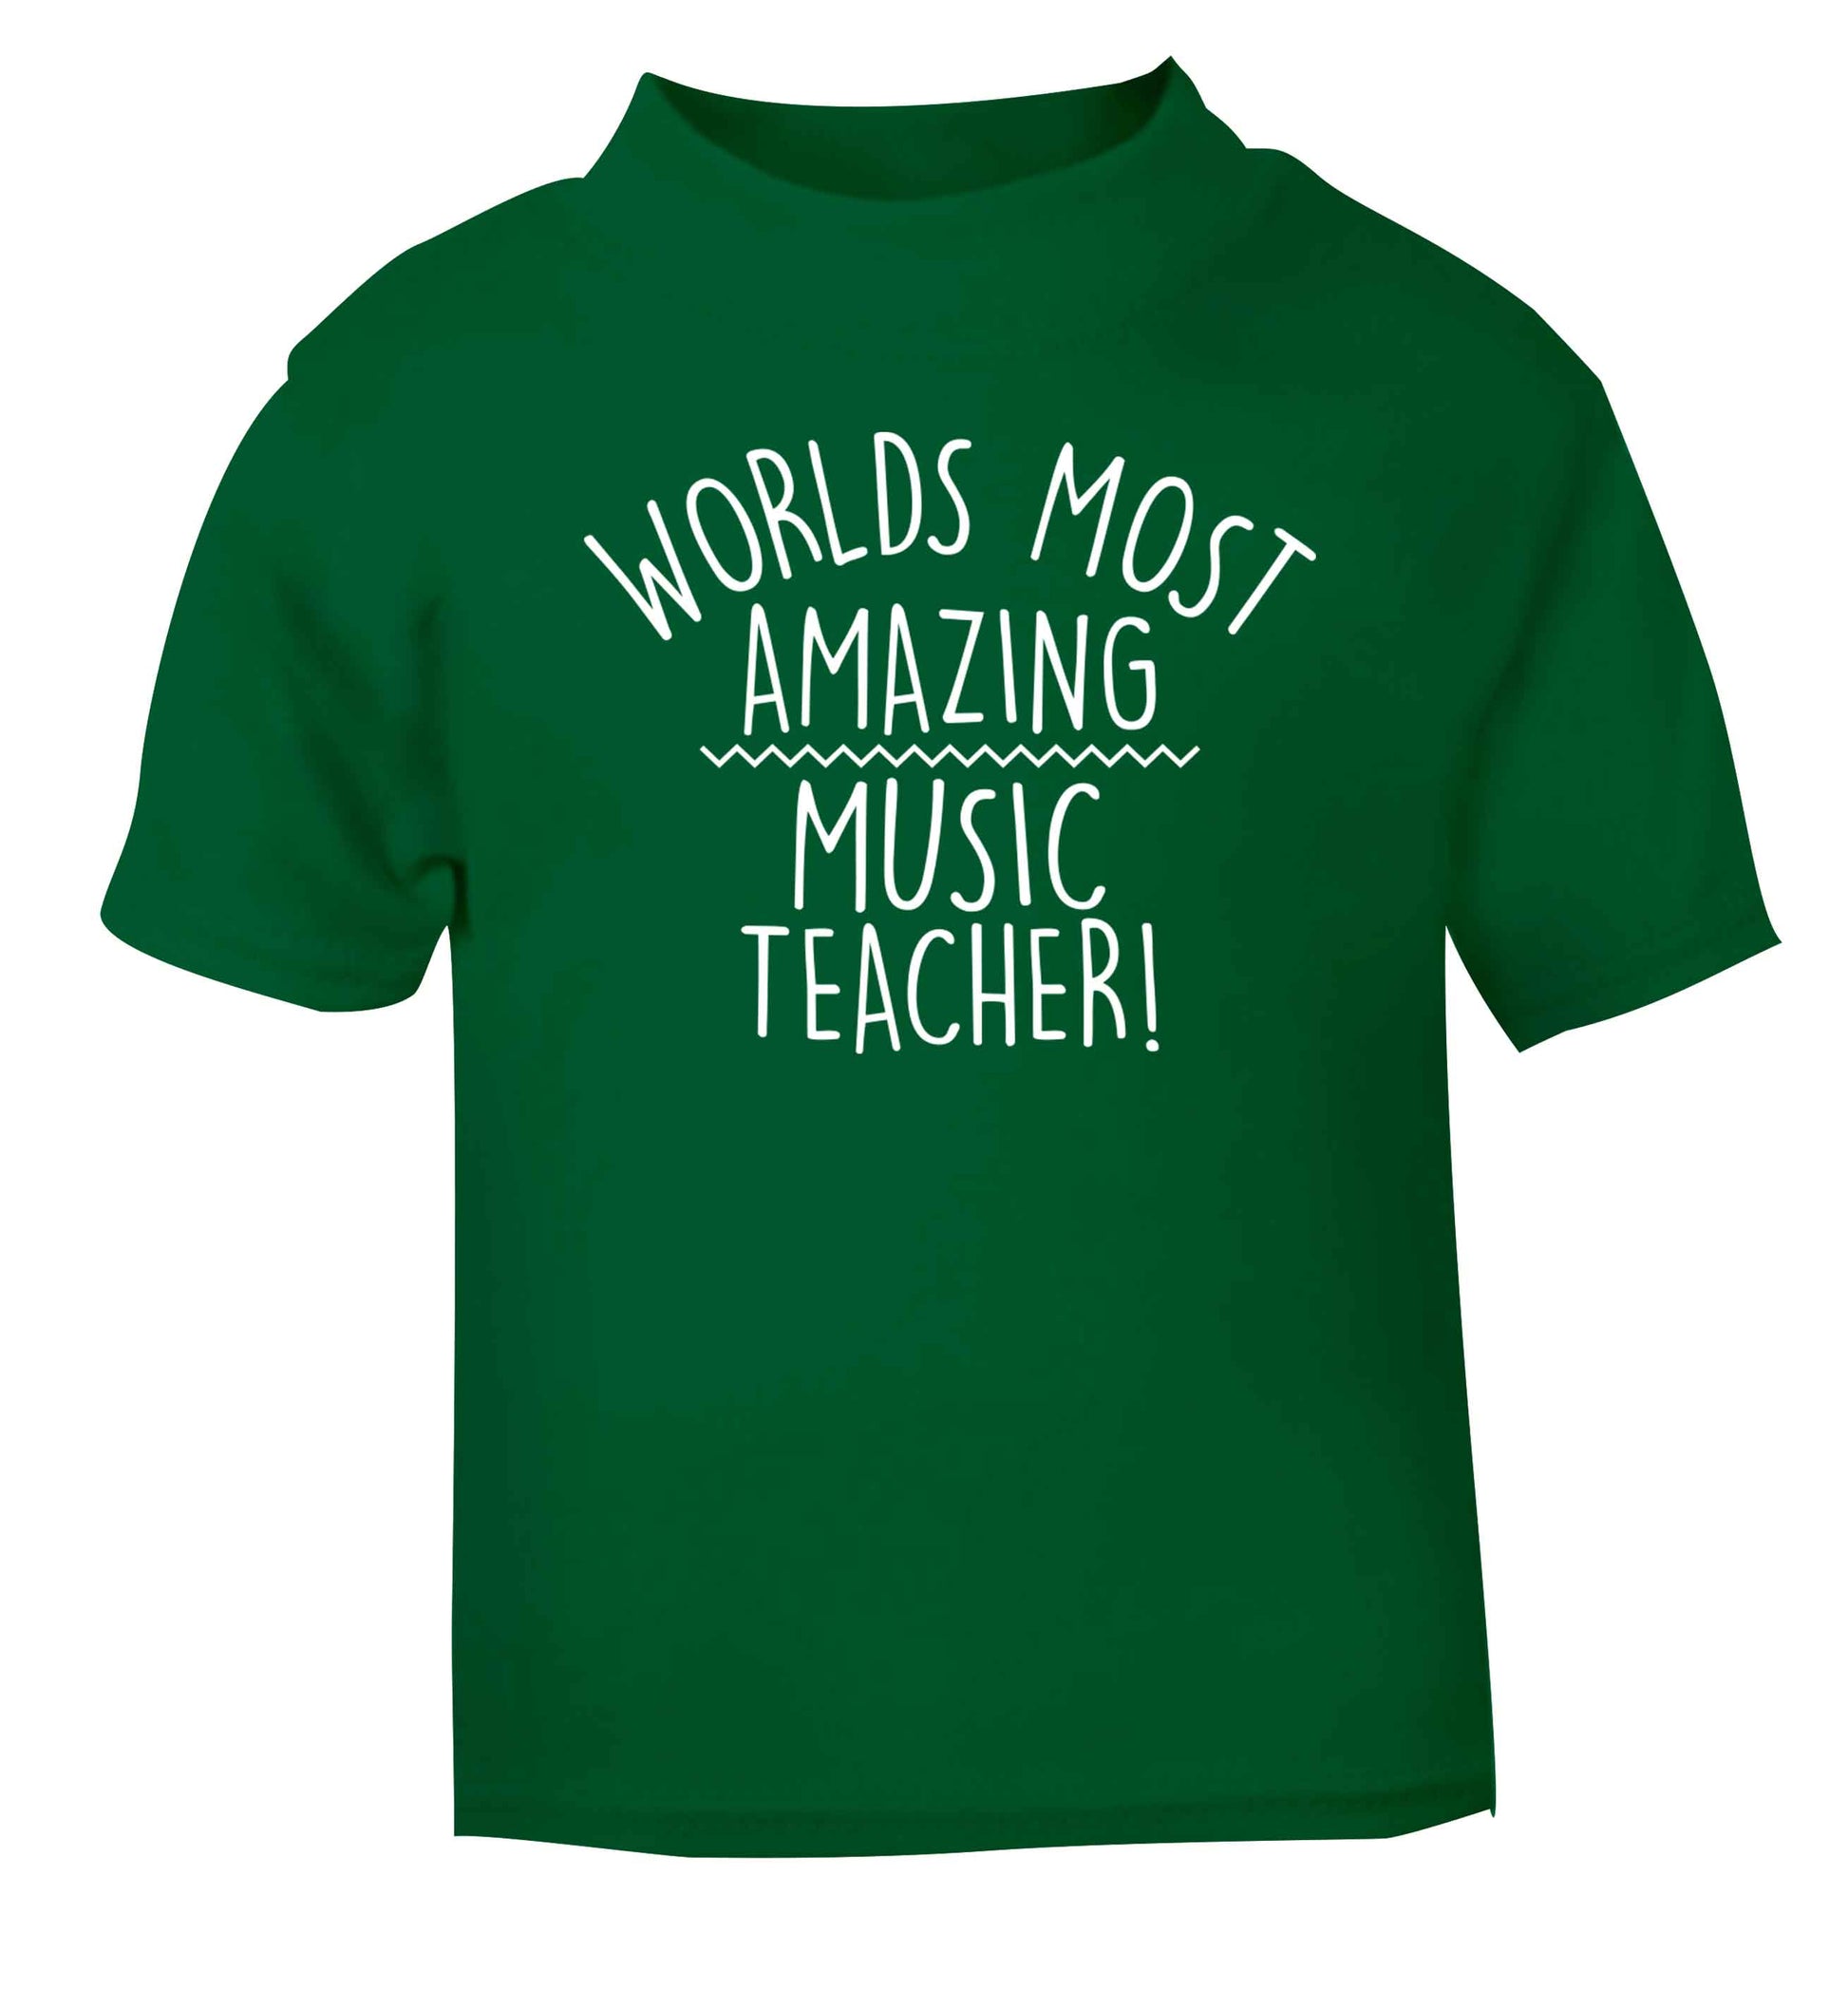 Worlds most amazing music teacher green baby toddler Tshirt 2 Years